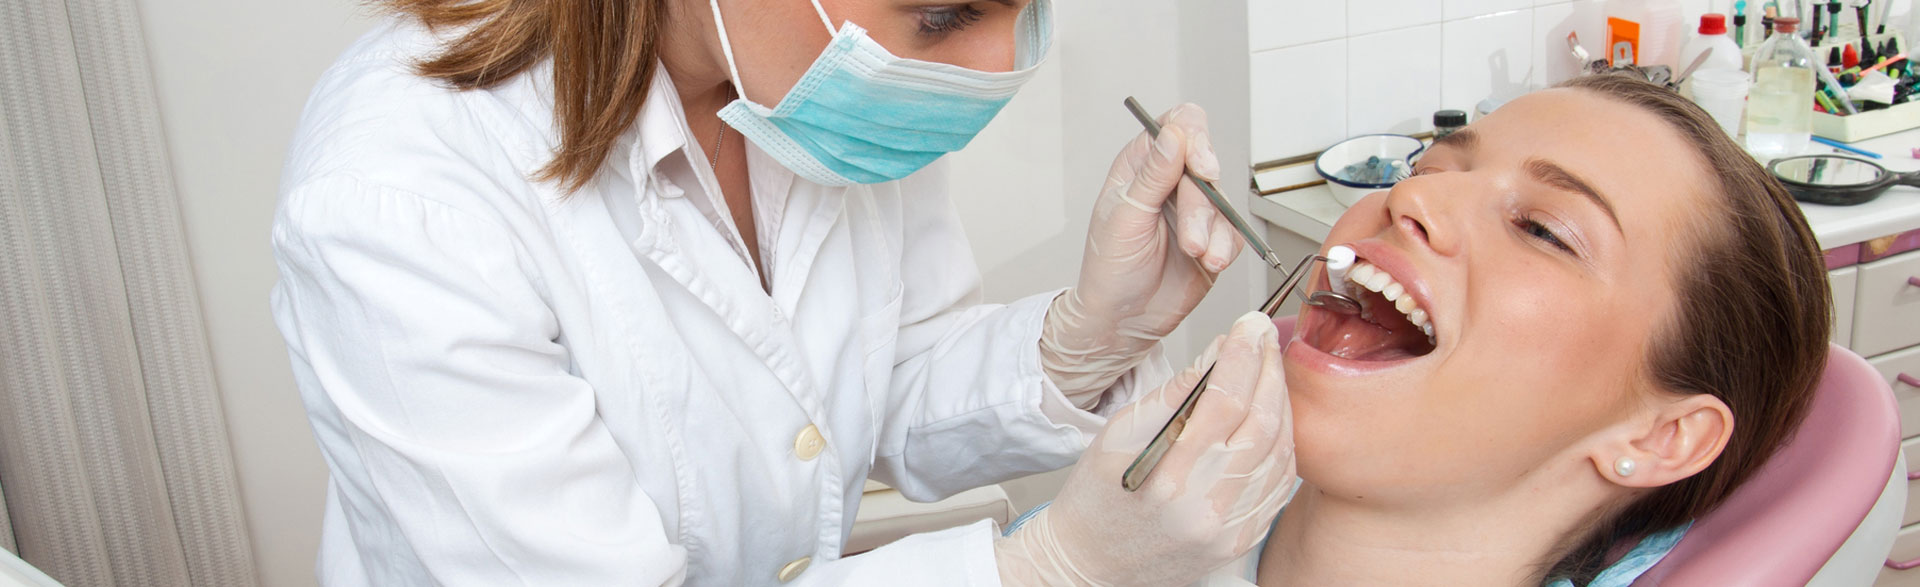 Dentist examining patient teeth before doing bone grafting treatment